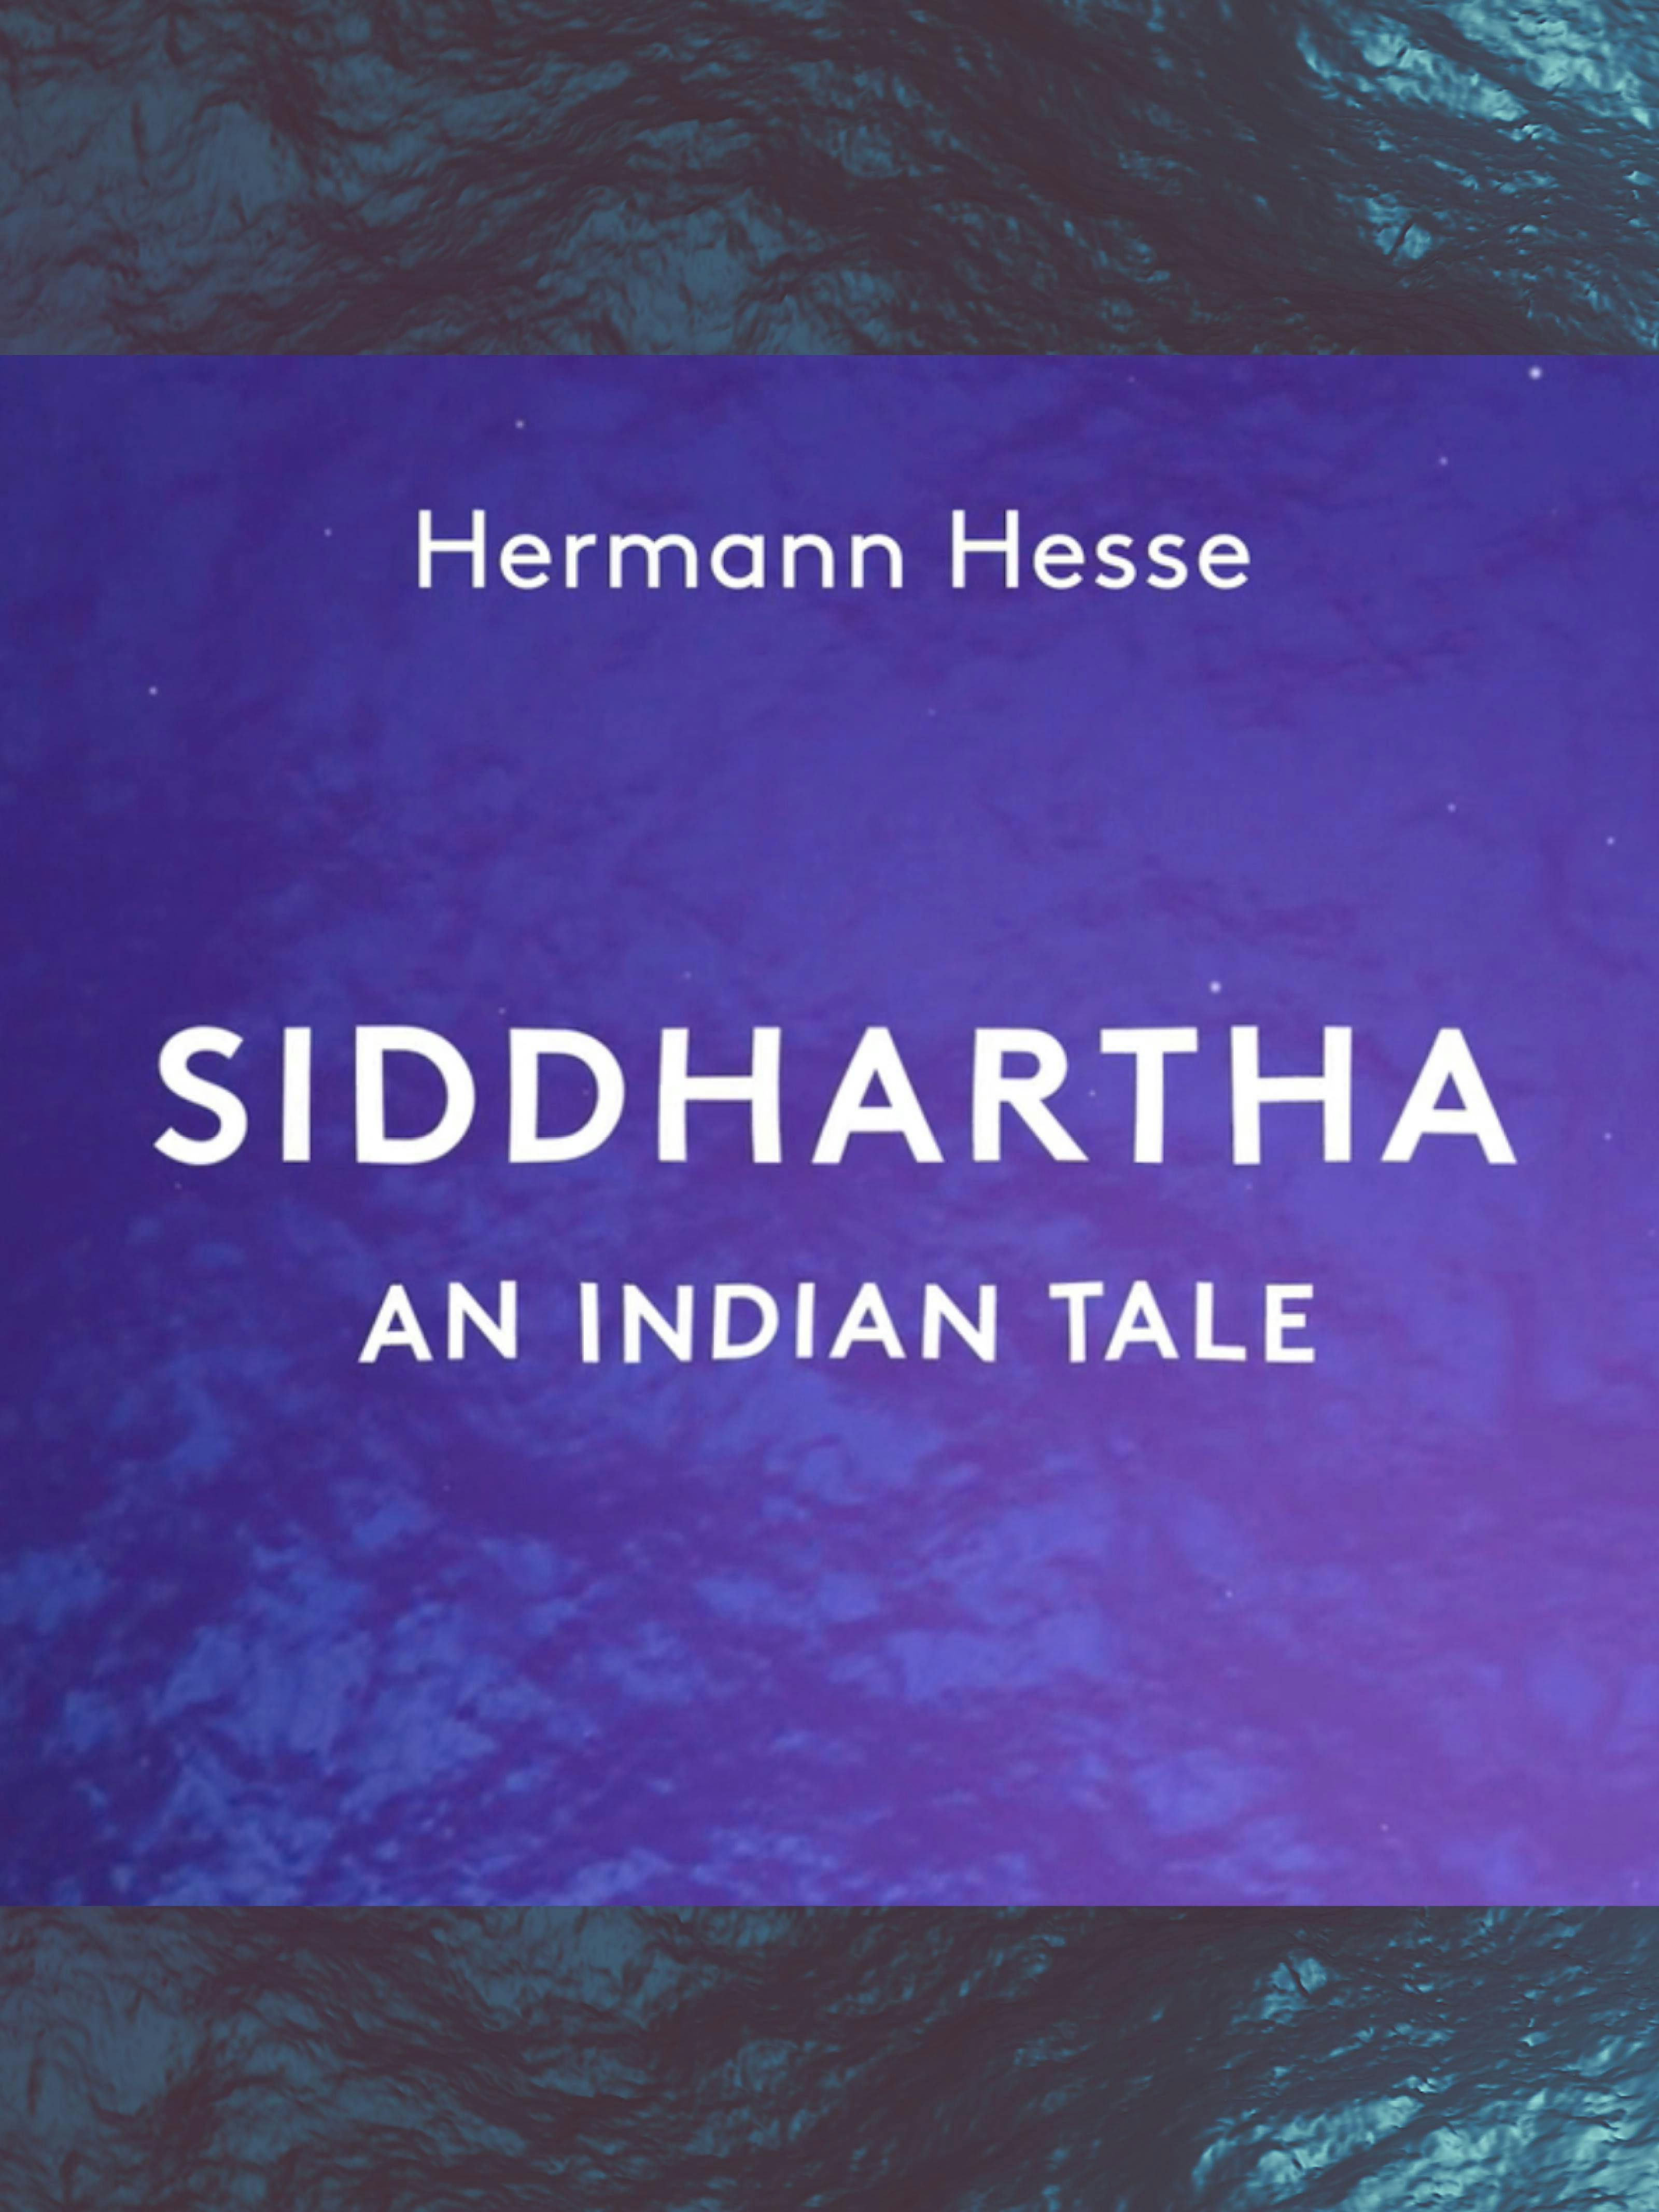 Siddhartha: unabridged narration - Hermann Hesse